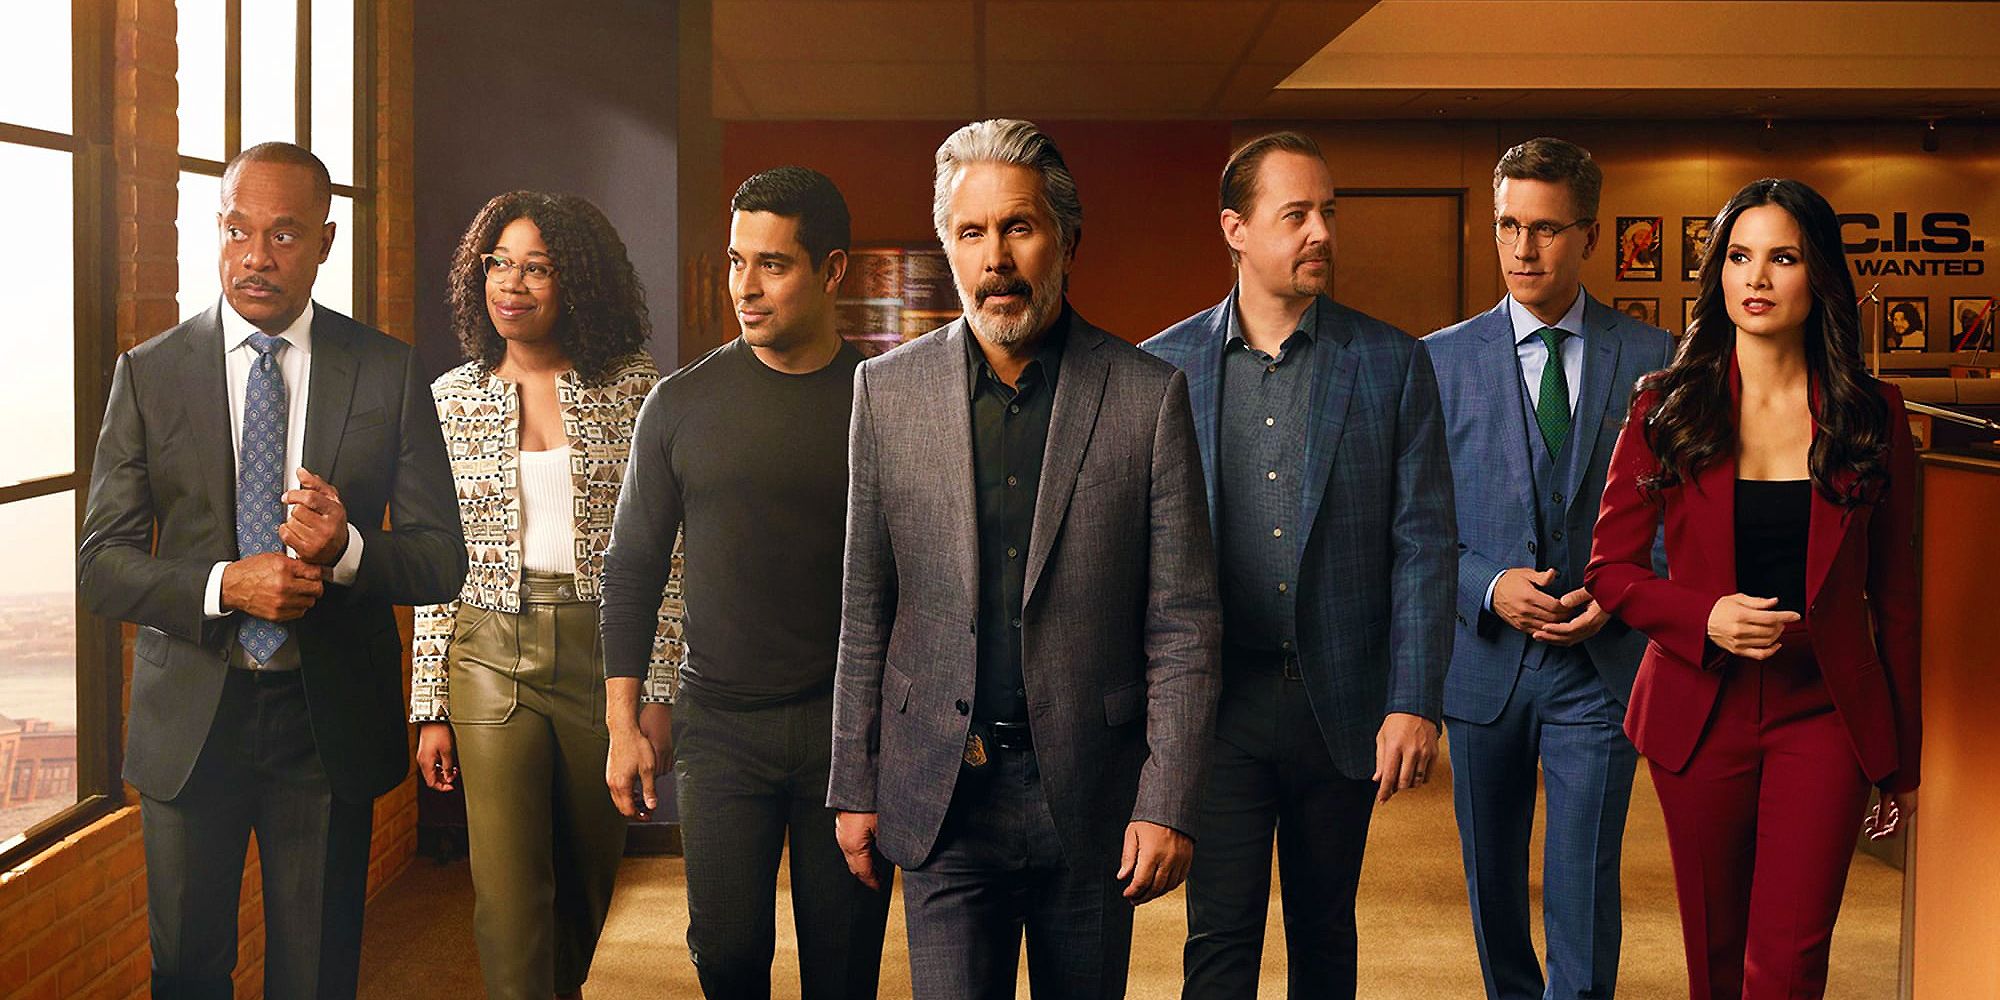 The cast of NCIS walks forward in NCIS Season 21 Promotional Image